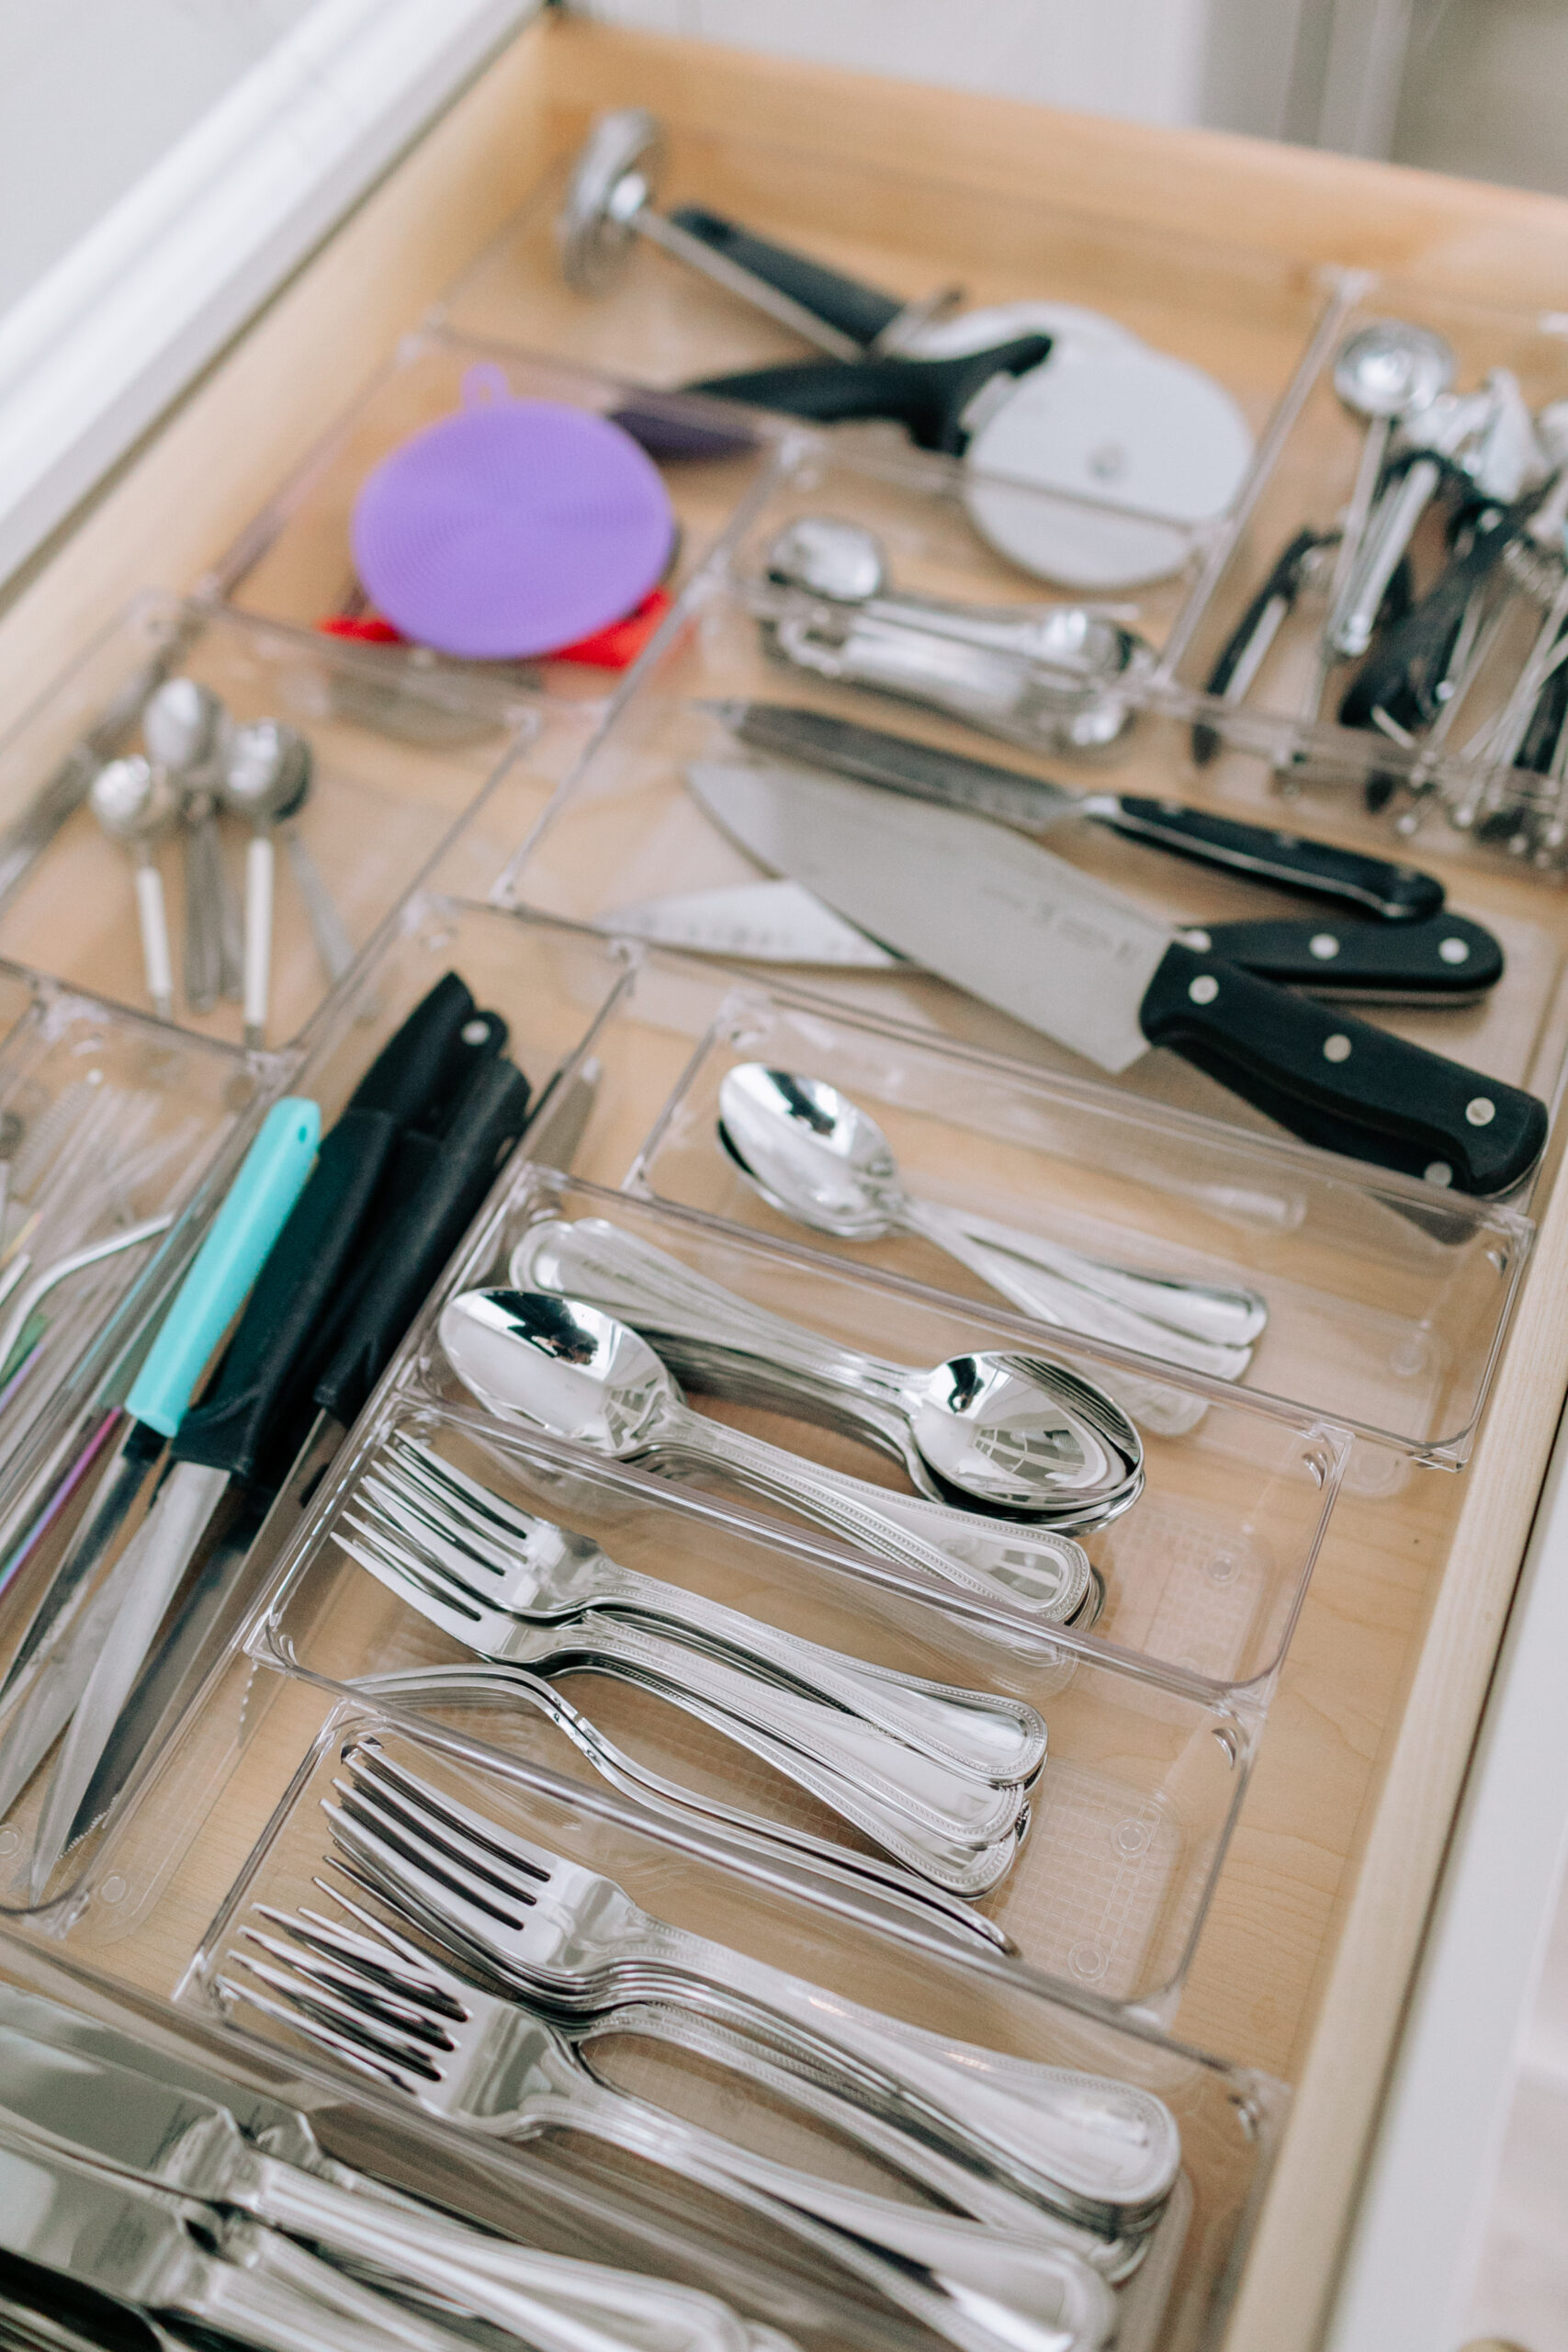 Clear drawer organization in a kitchen drawer